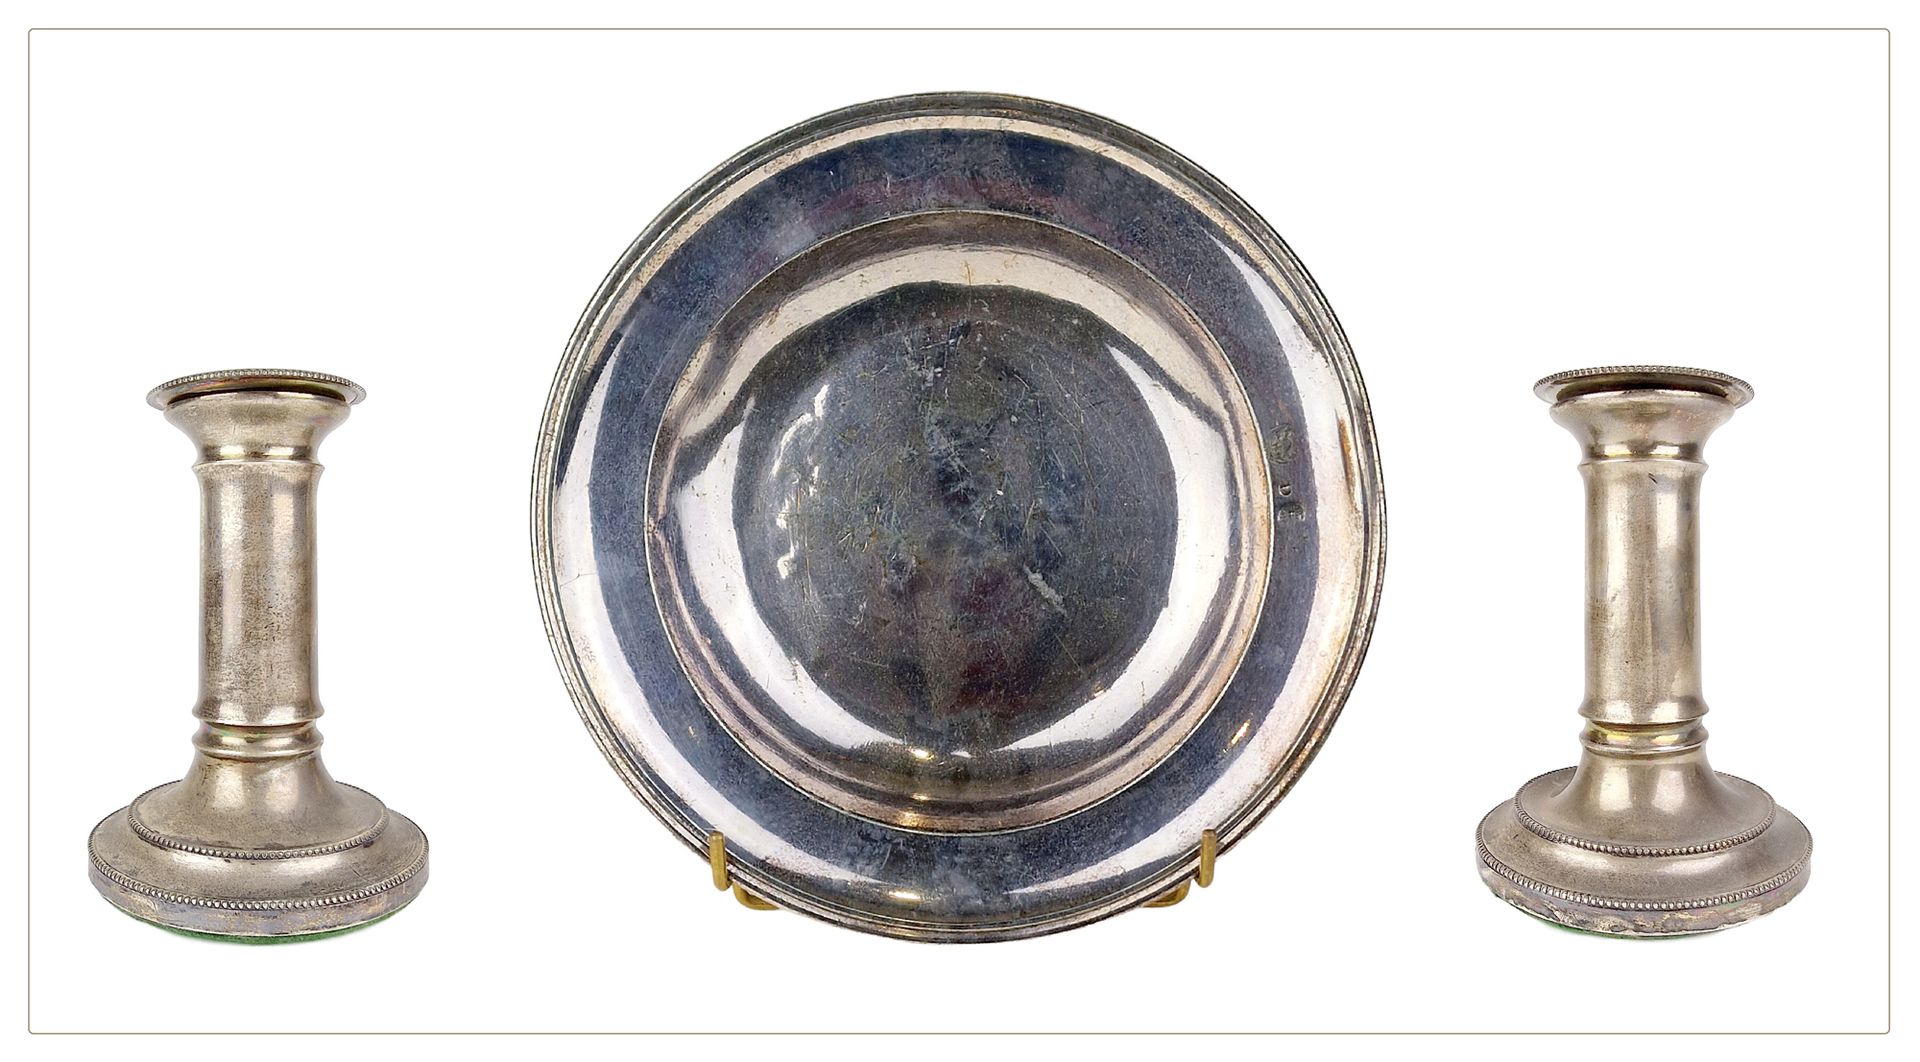 ANGLETERRE, vers 1900 一对烛台

-

镀银金属，轴上有珍珠花环的装饰。附有一个有许多划痕的盘子。

烛台的尺寸：高：11厘米

盘子的尺&hellip;